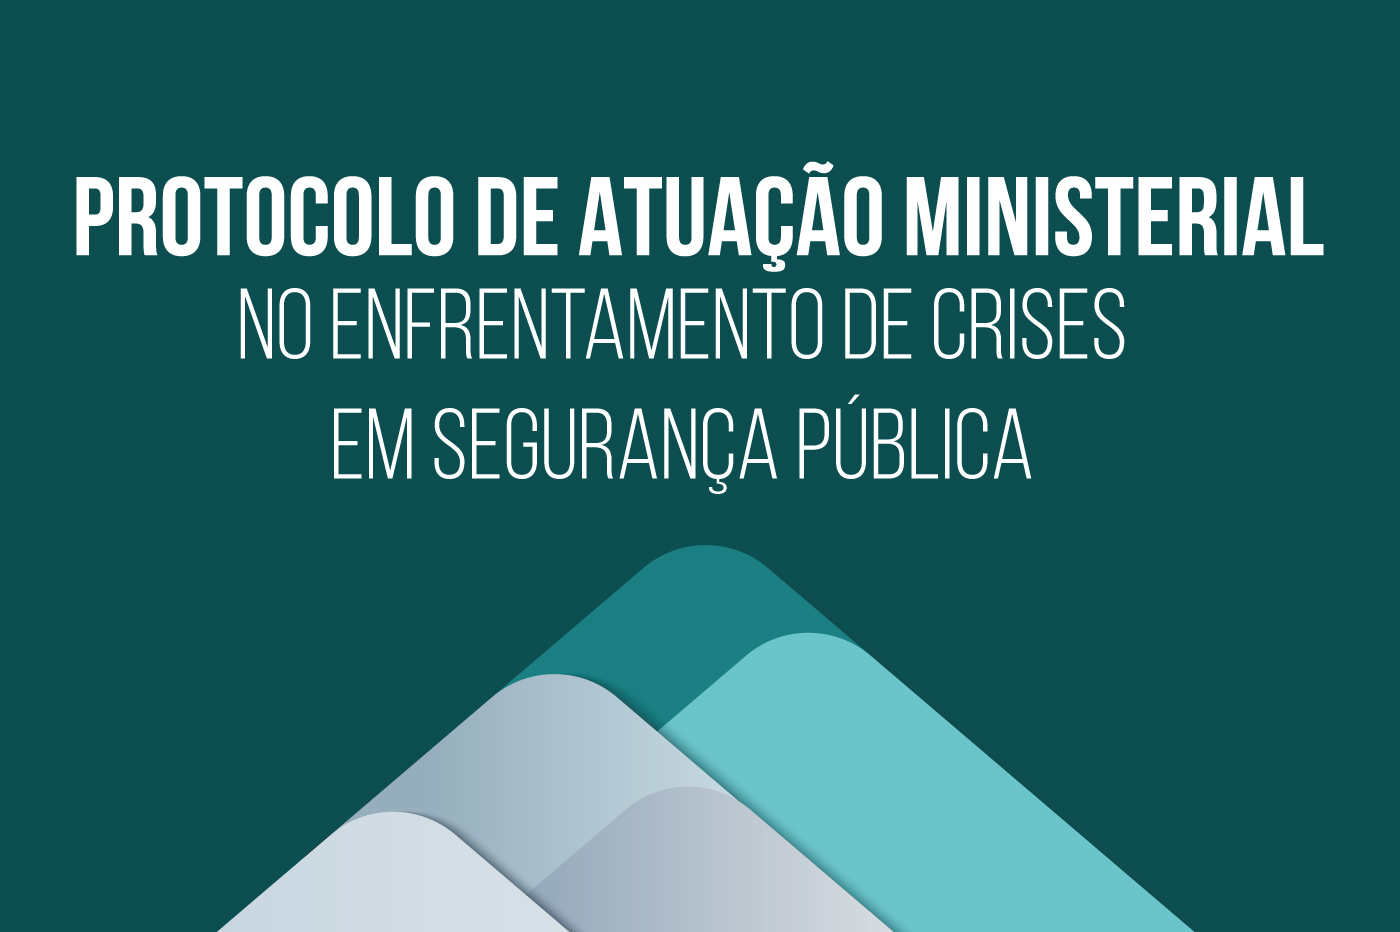 Banner_noticia_protocolo_atuacao_crise_seg_publica.jpg - 220,56 kB